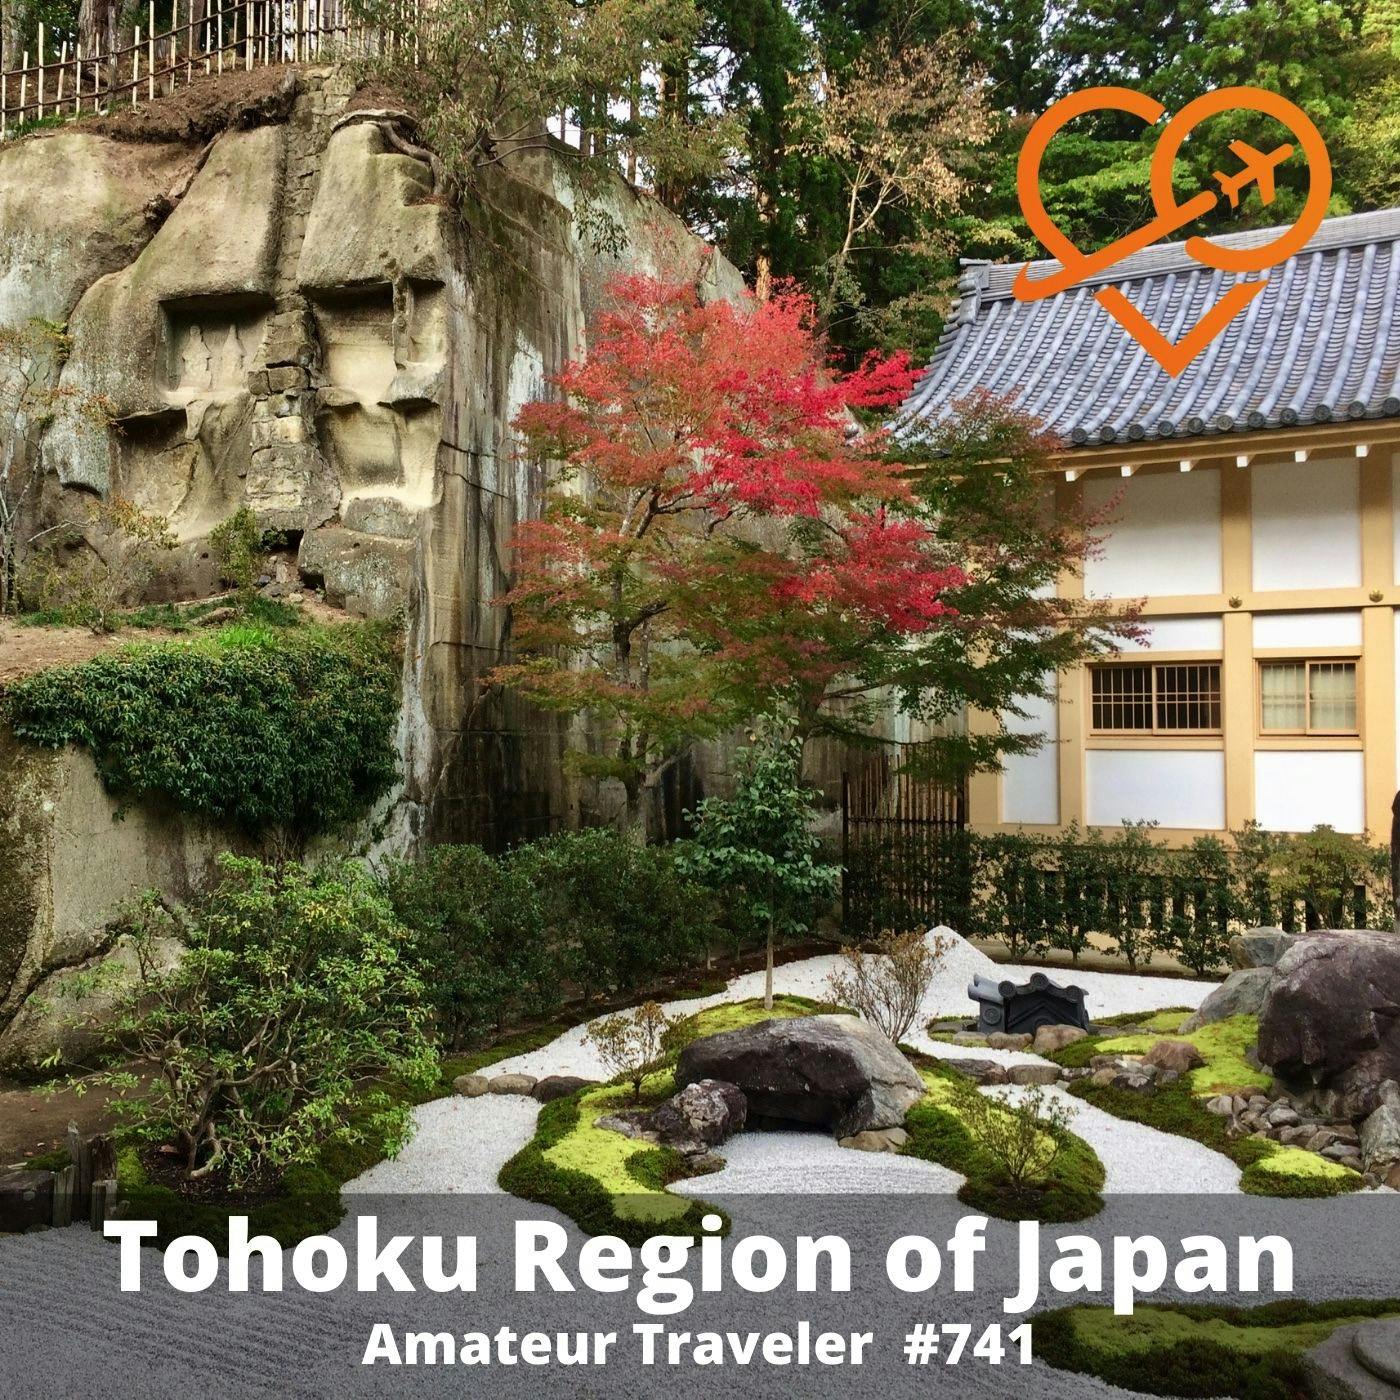 AT#741 - Travel to the Tohoku Region of Japan